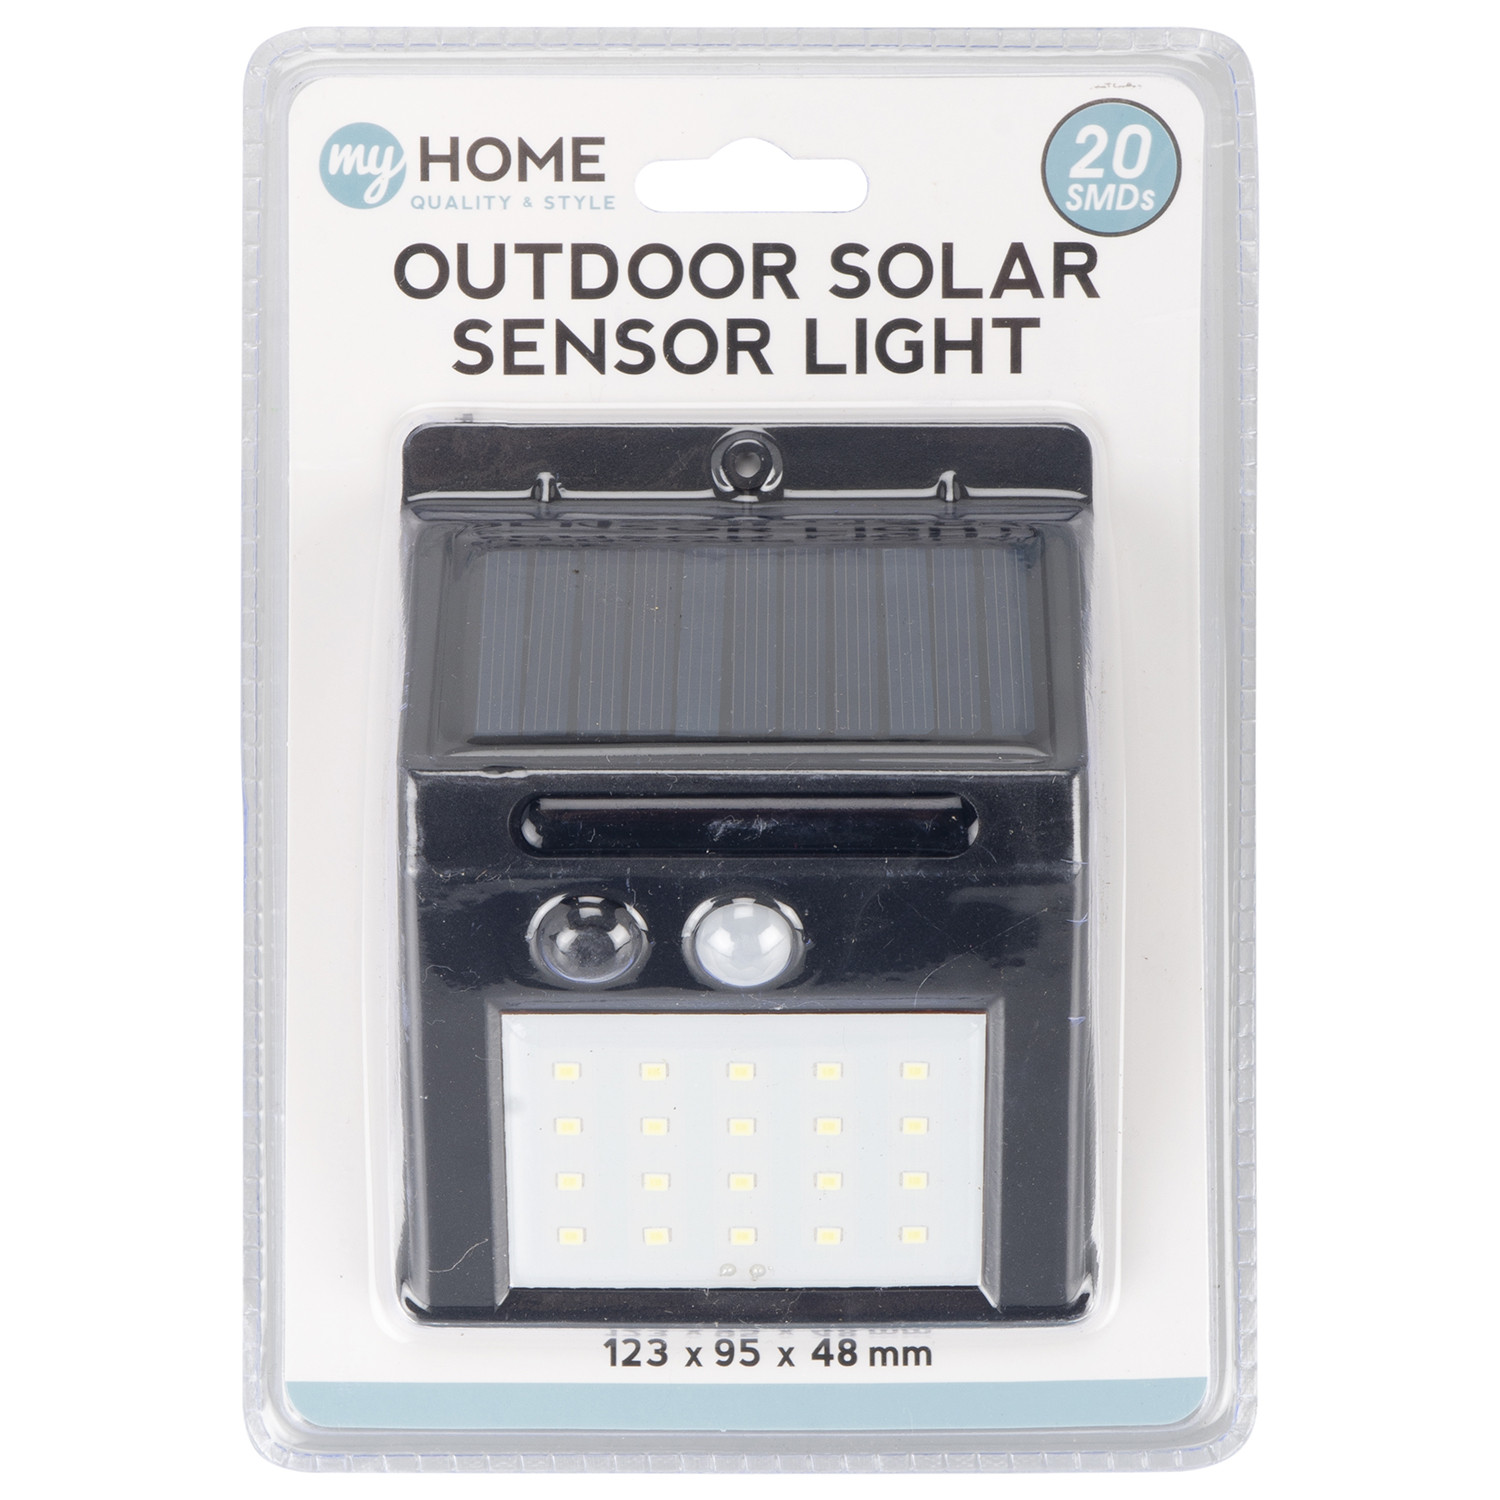 My Home Outdoor Solar Sensor Light Image